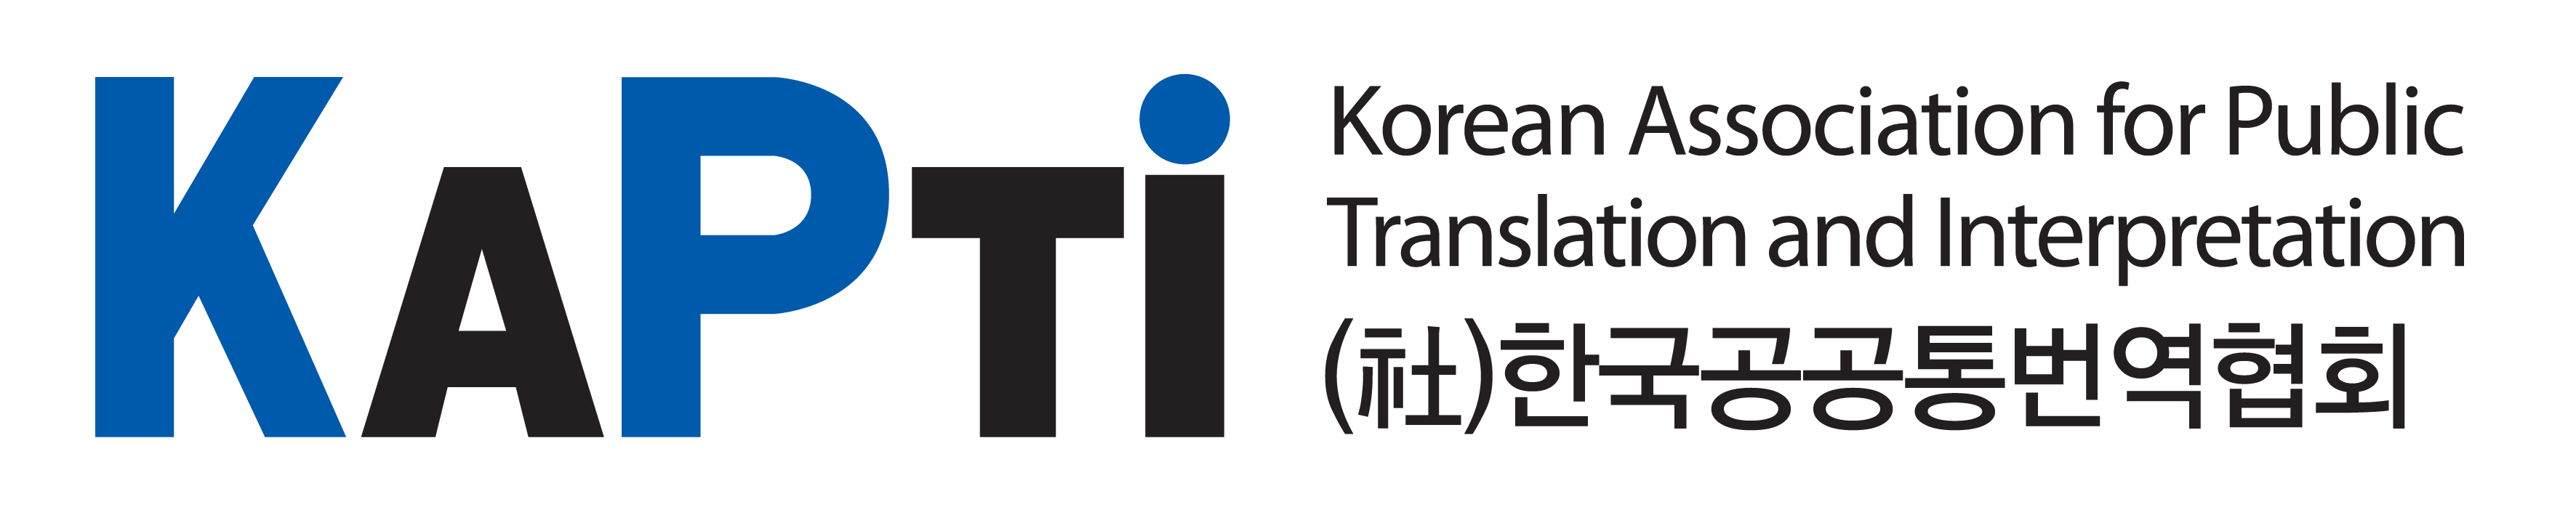 Korean Association for Public Translation and Interpretation logo